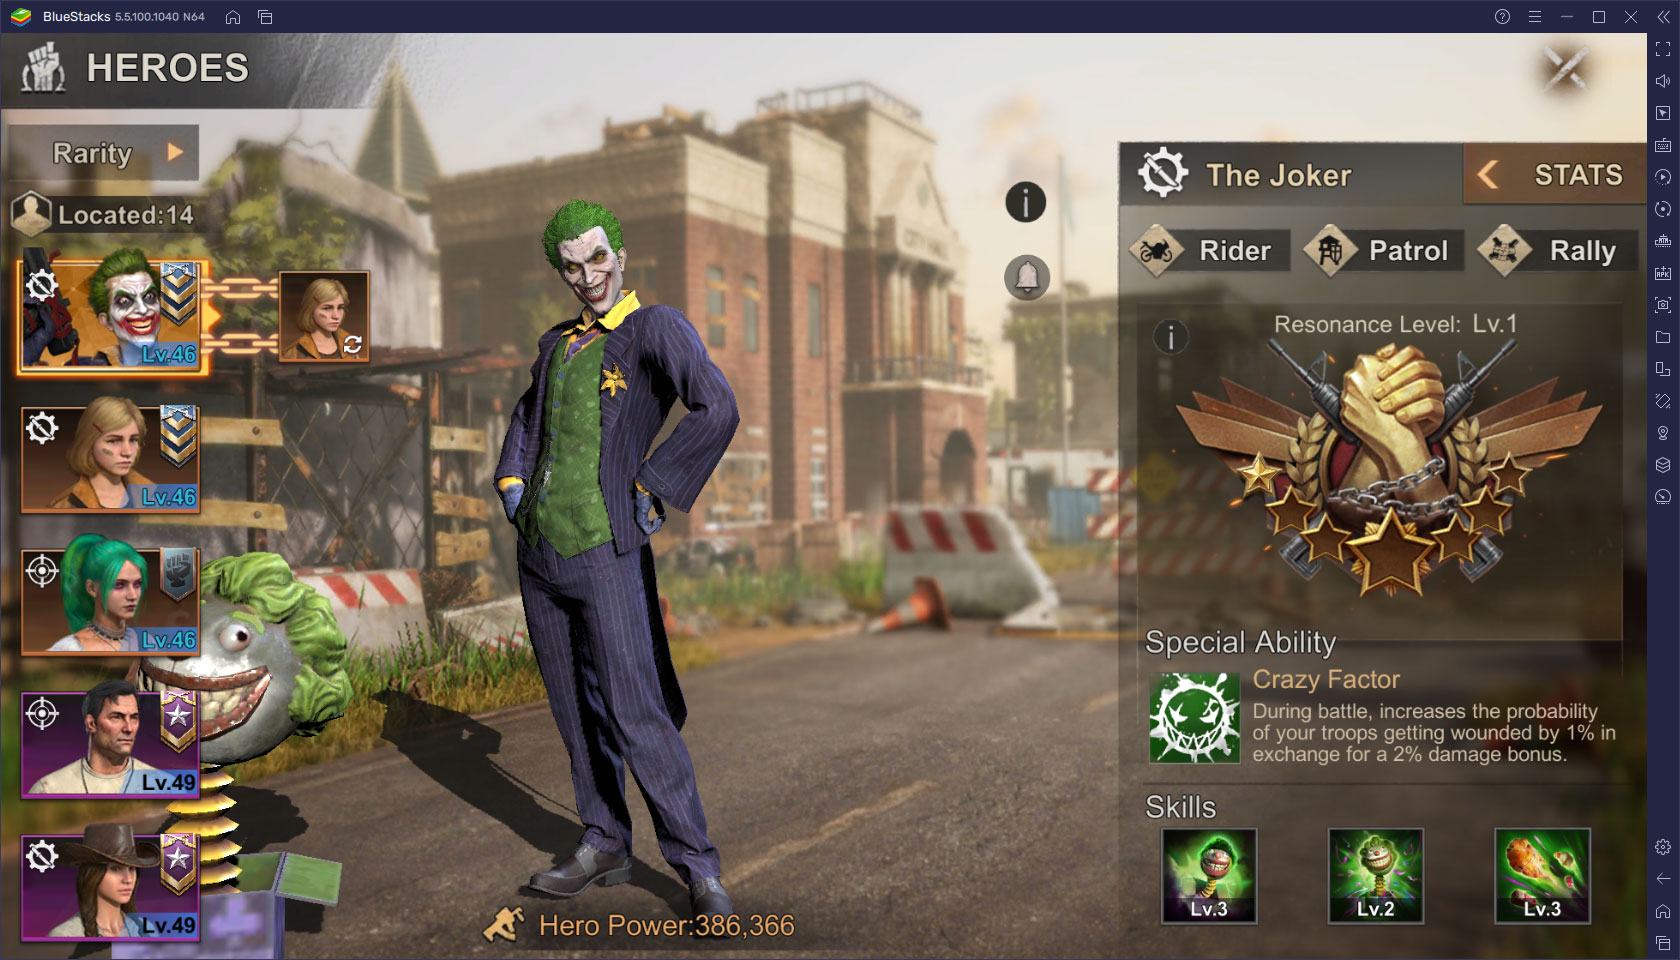 State of Survival: Hướng dẫn tham gia sự kiện Joker